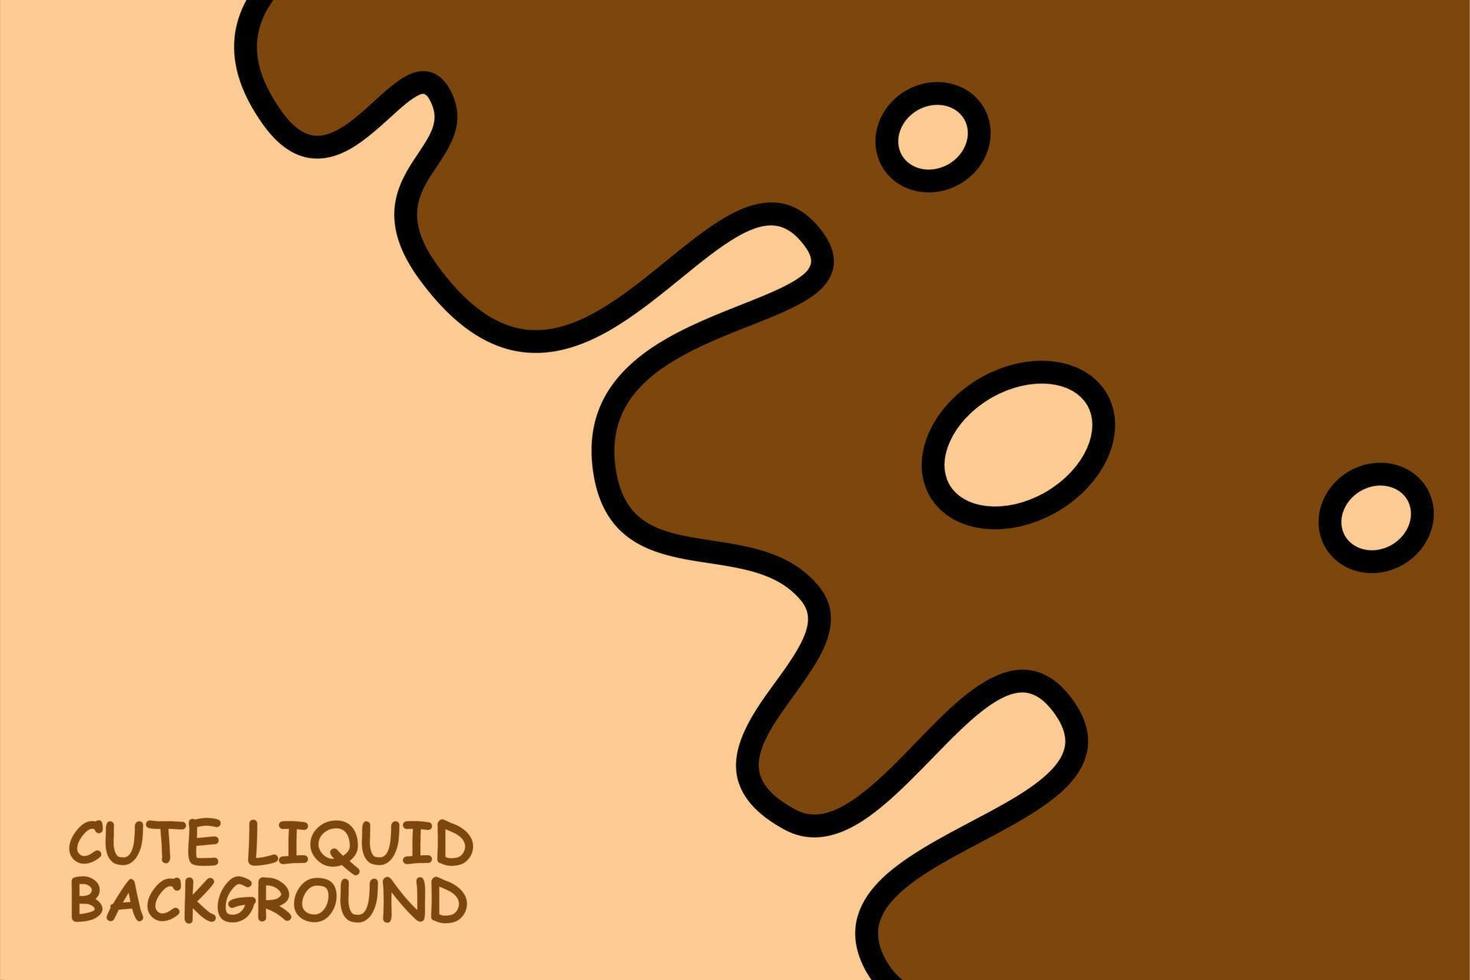 Chocolate, choco, melt, cute Background with comic style, fluid liquid fun background, Cartoon Vector Illustration, cute wavy, comic background with wave, fluid, liquid